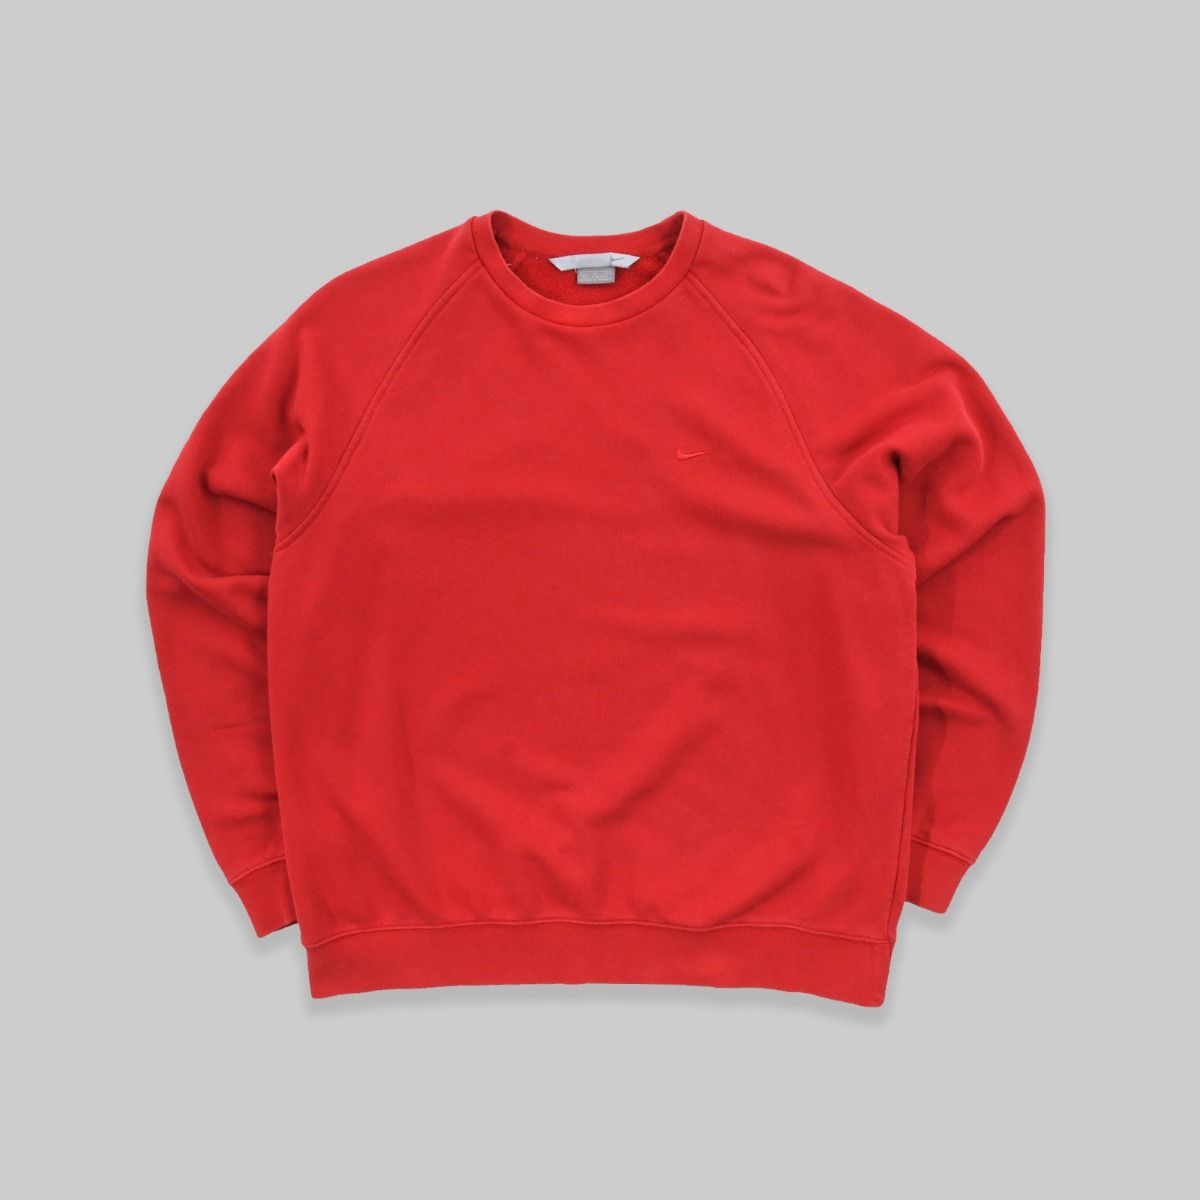 Nike Early 2000s Red Sweatshirt With Breast Swoosh logo